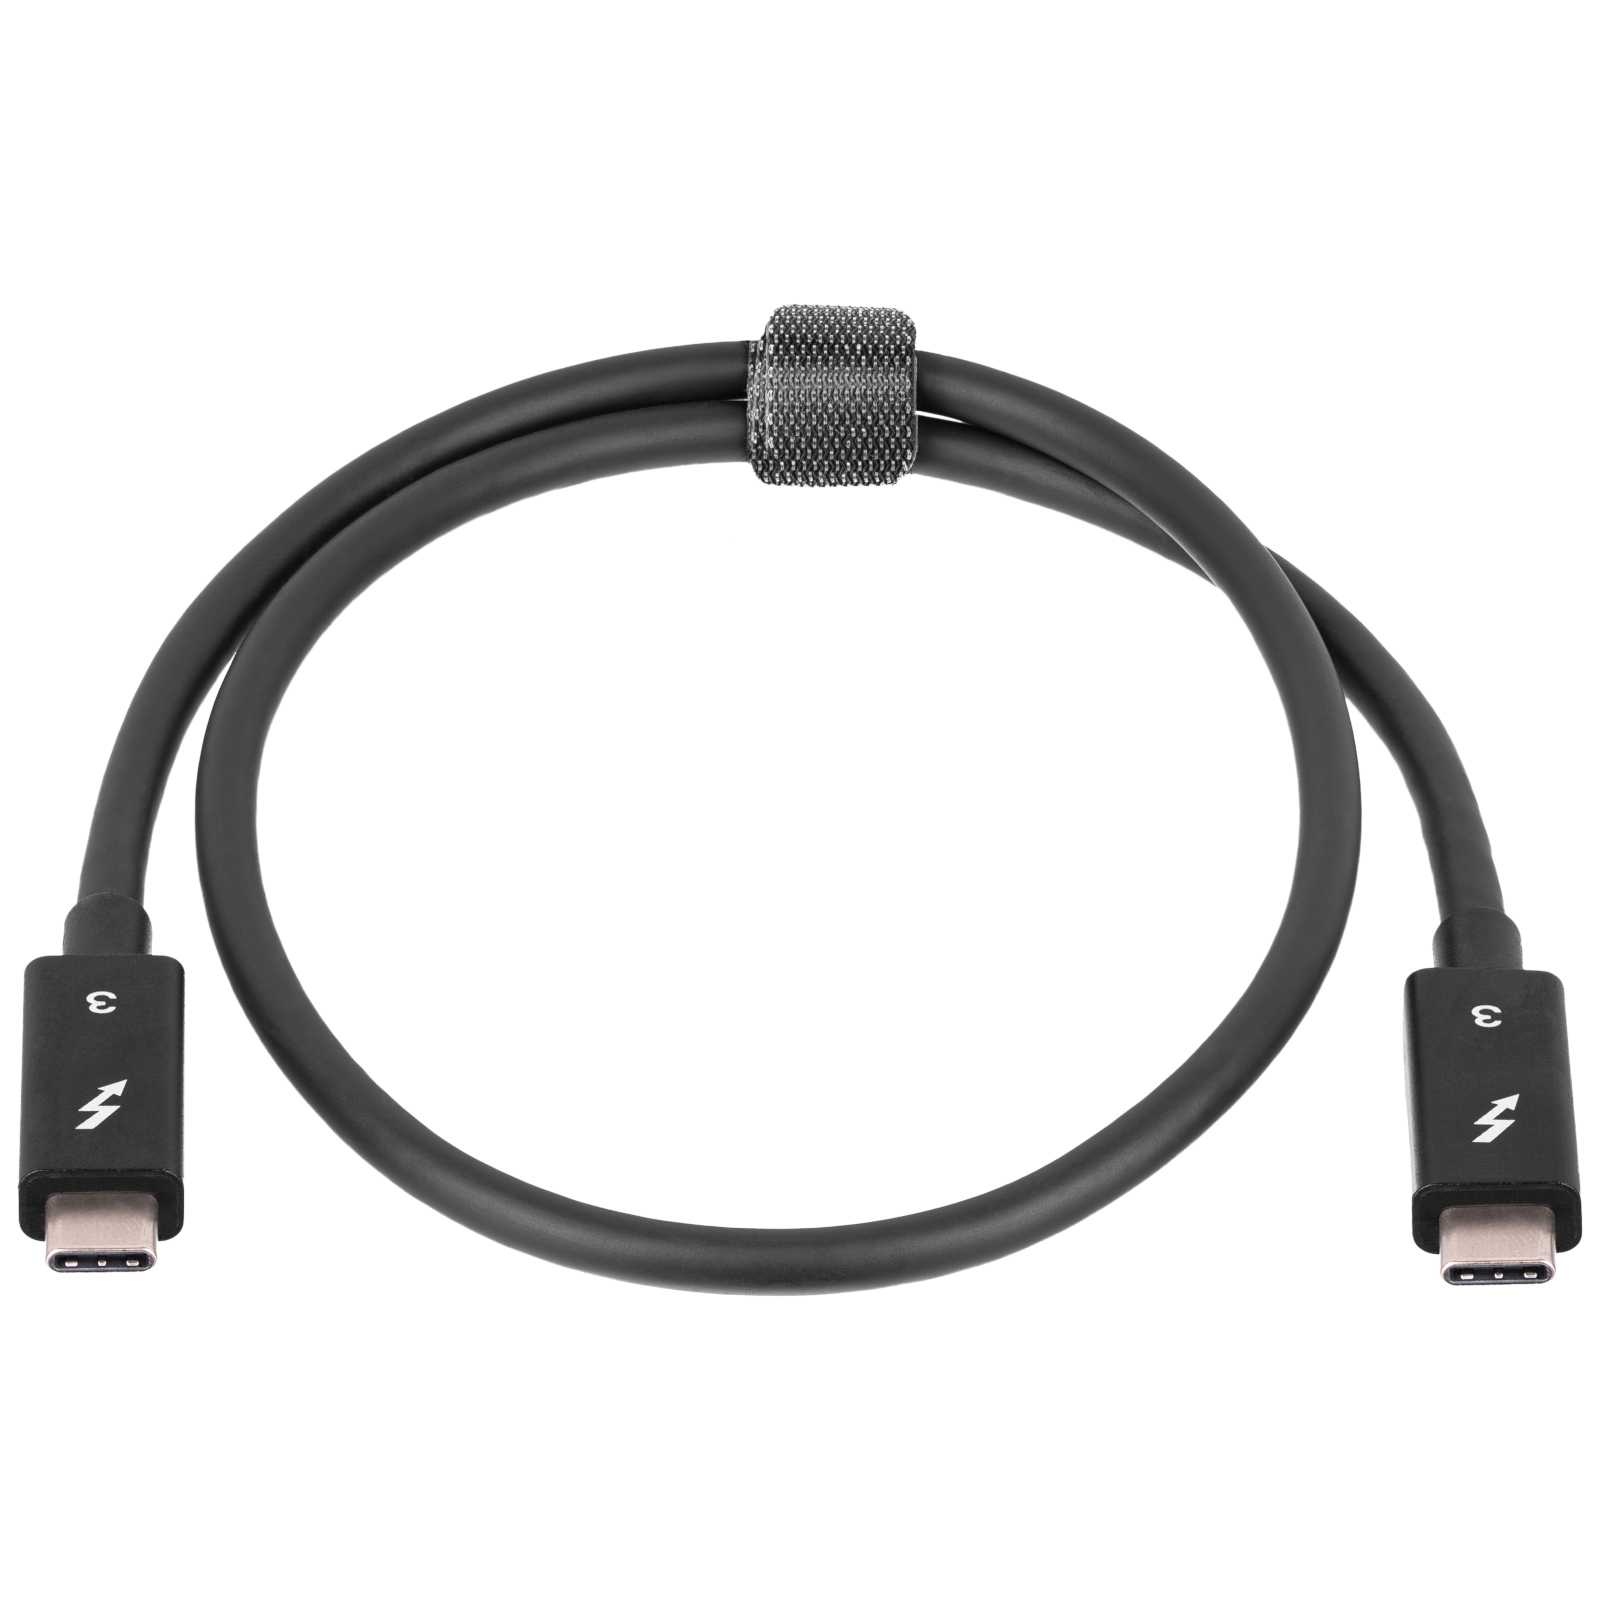 Main image Cable Thunderbolt 3 (USB type C) 50cm AK-USB-33 passive